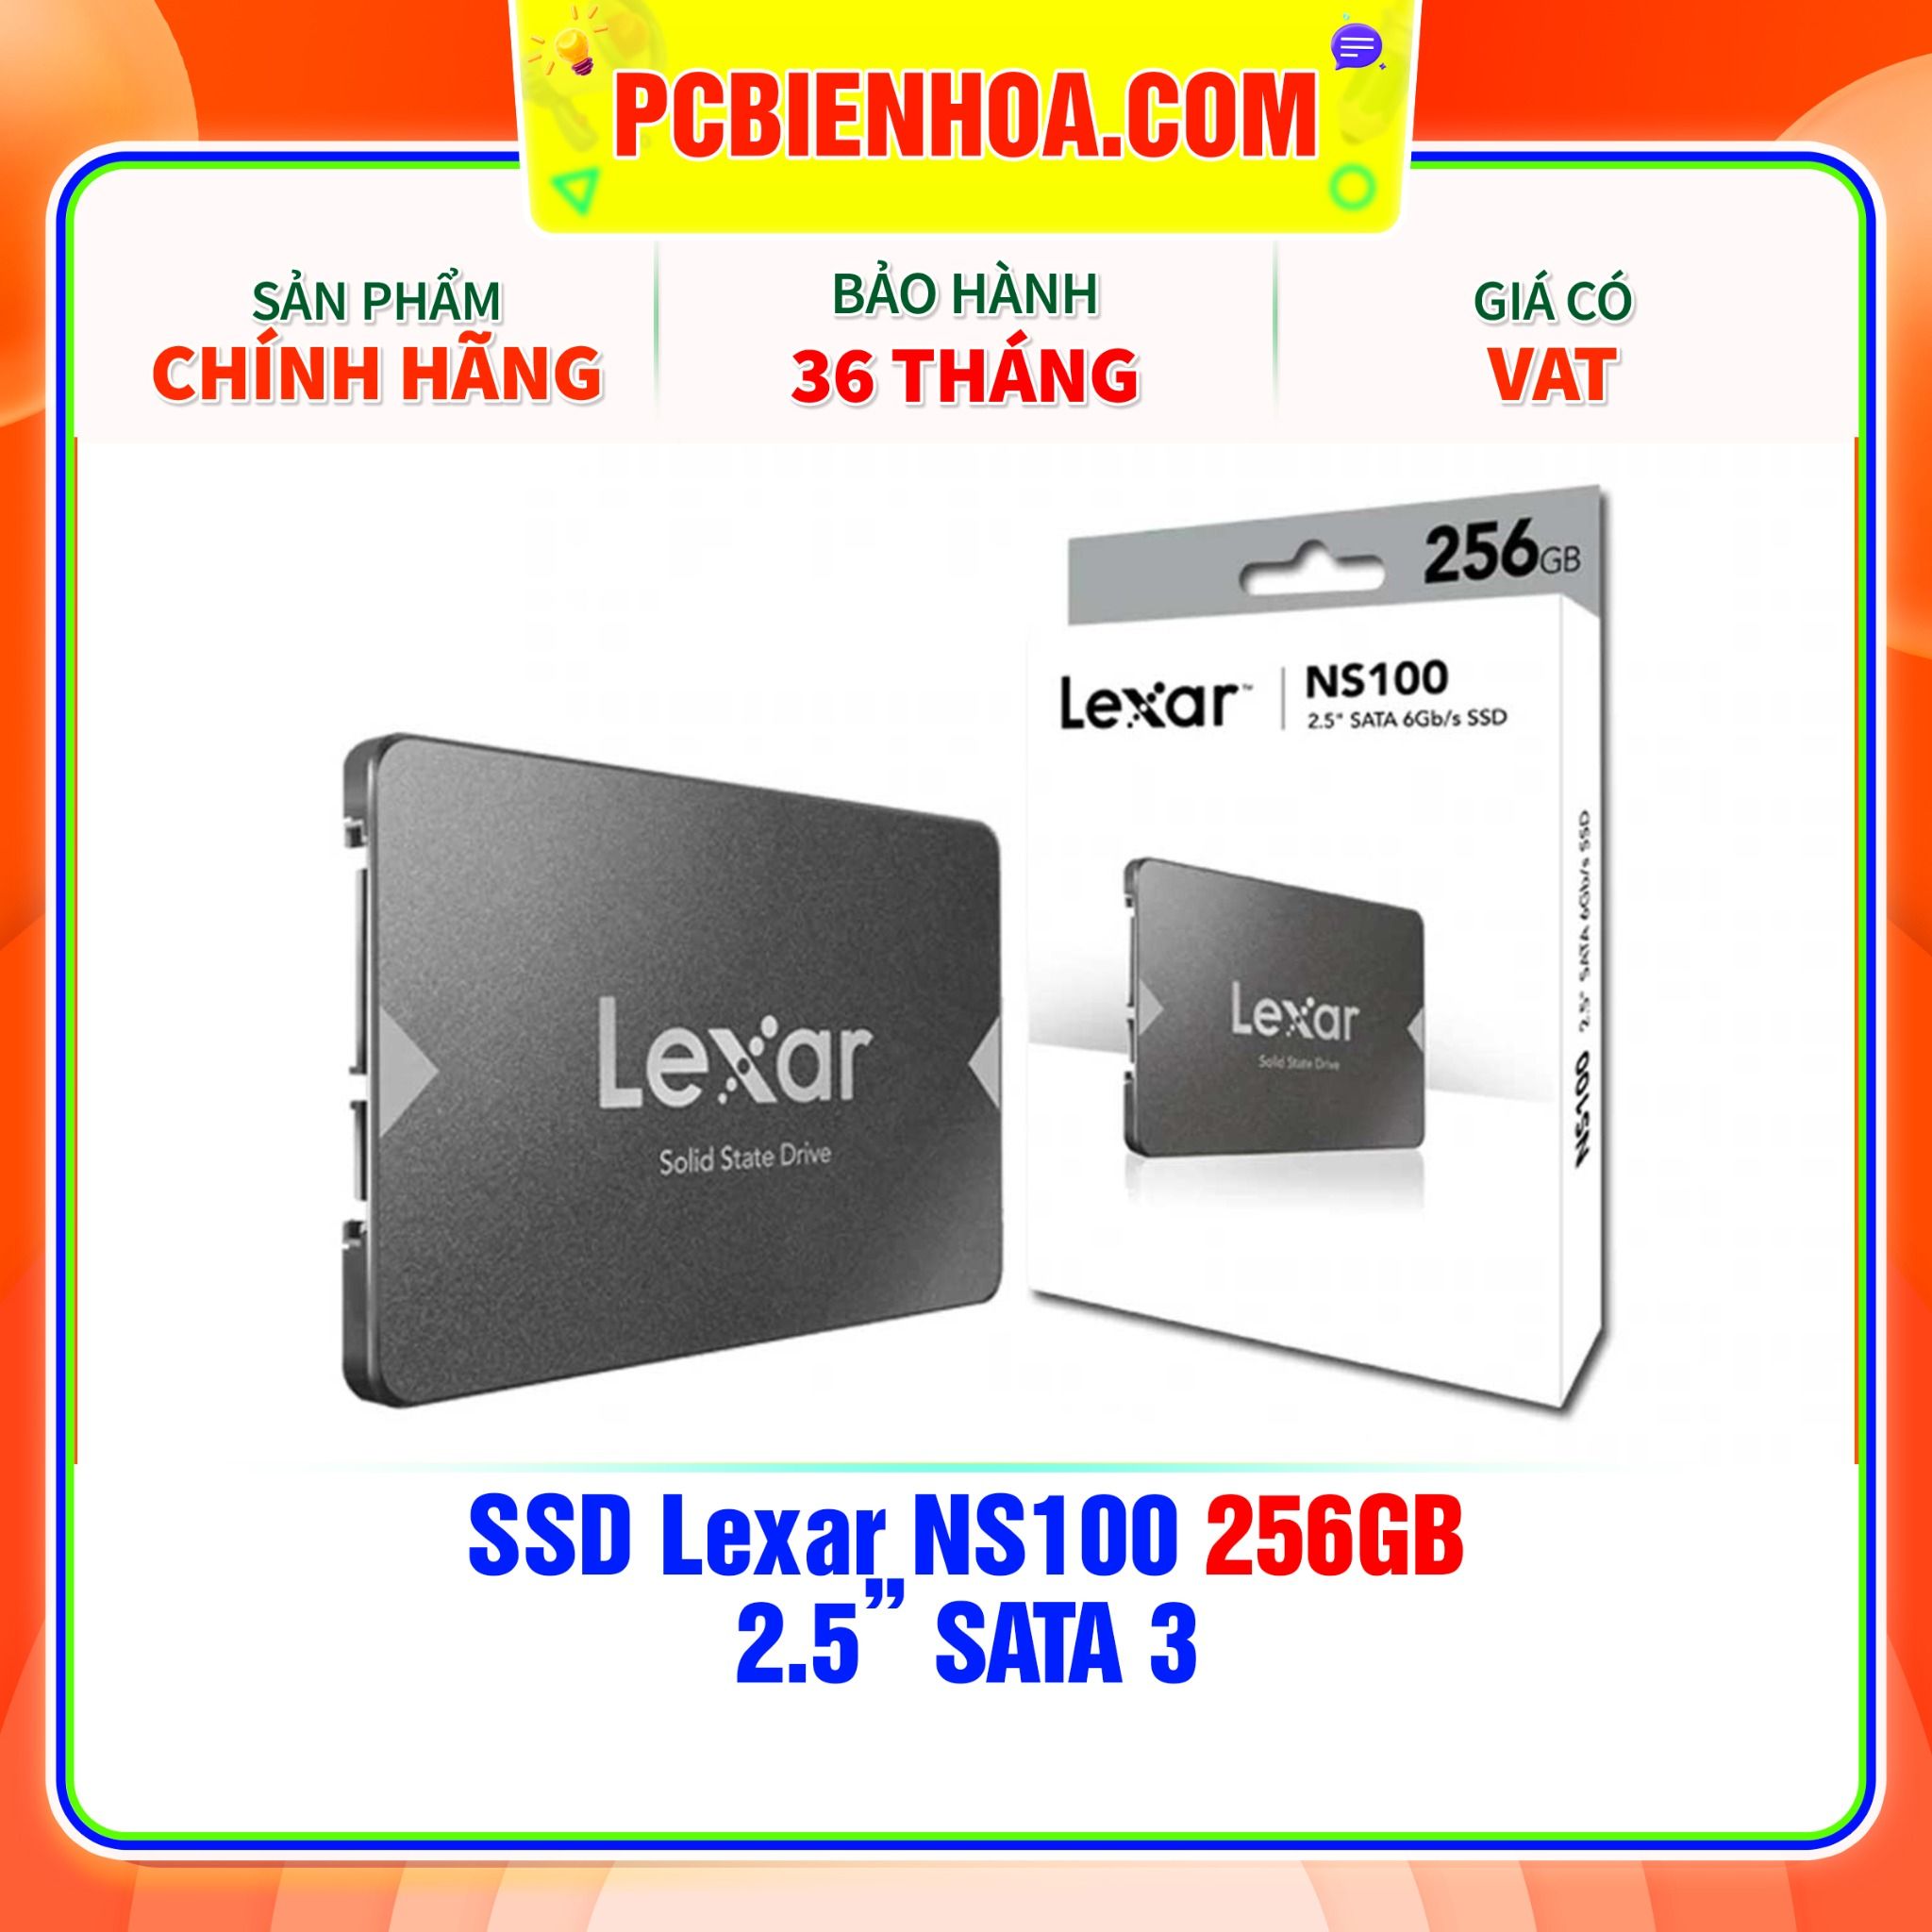  Ổ CỨNG SSD LEXAR NS100 256GB SATA 3 